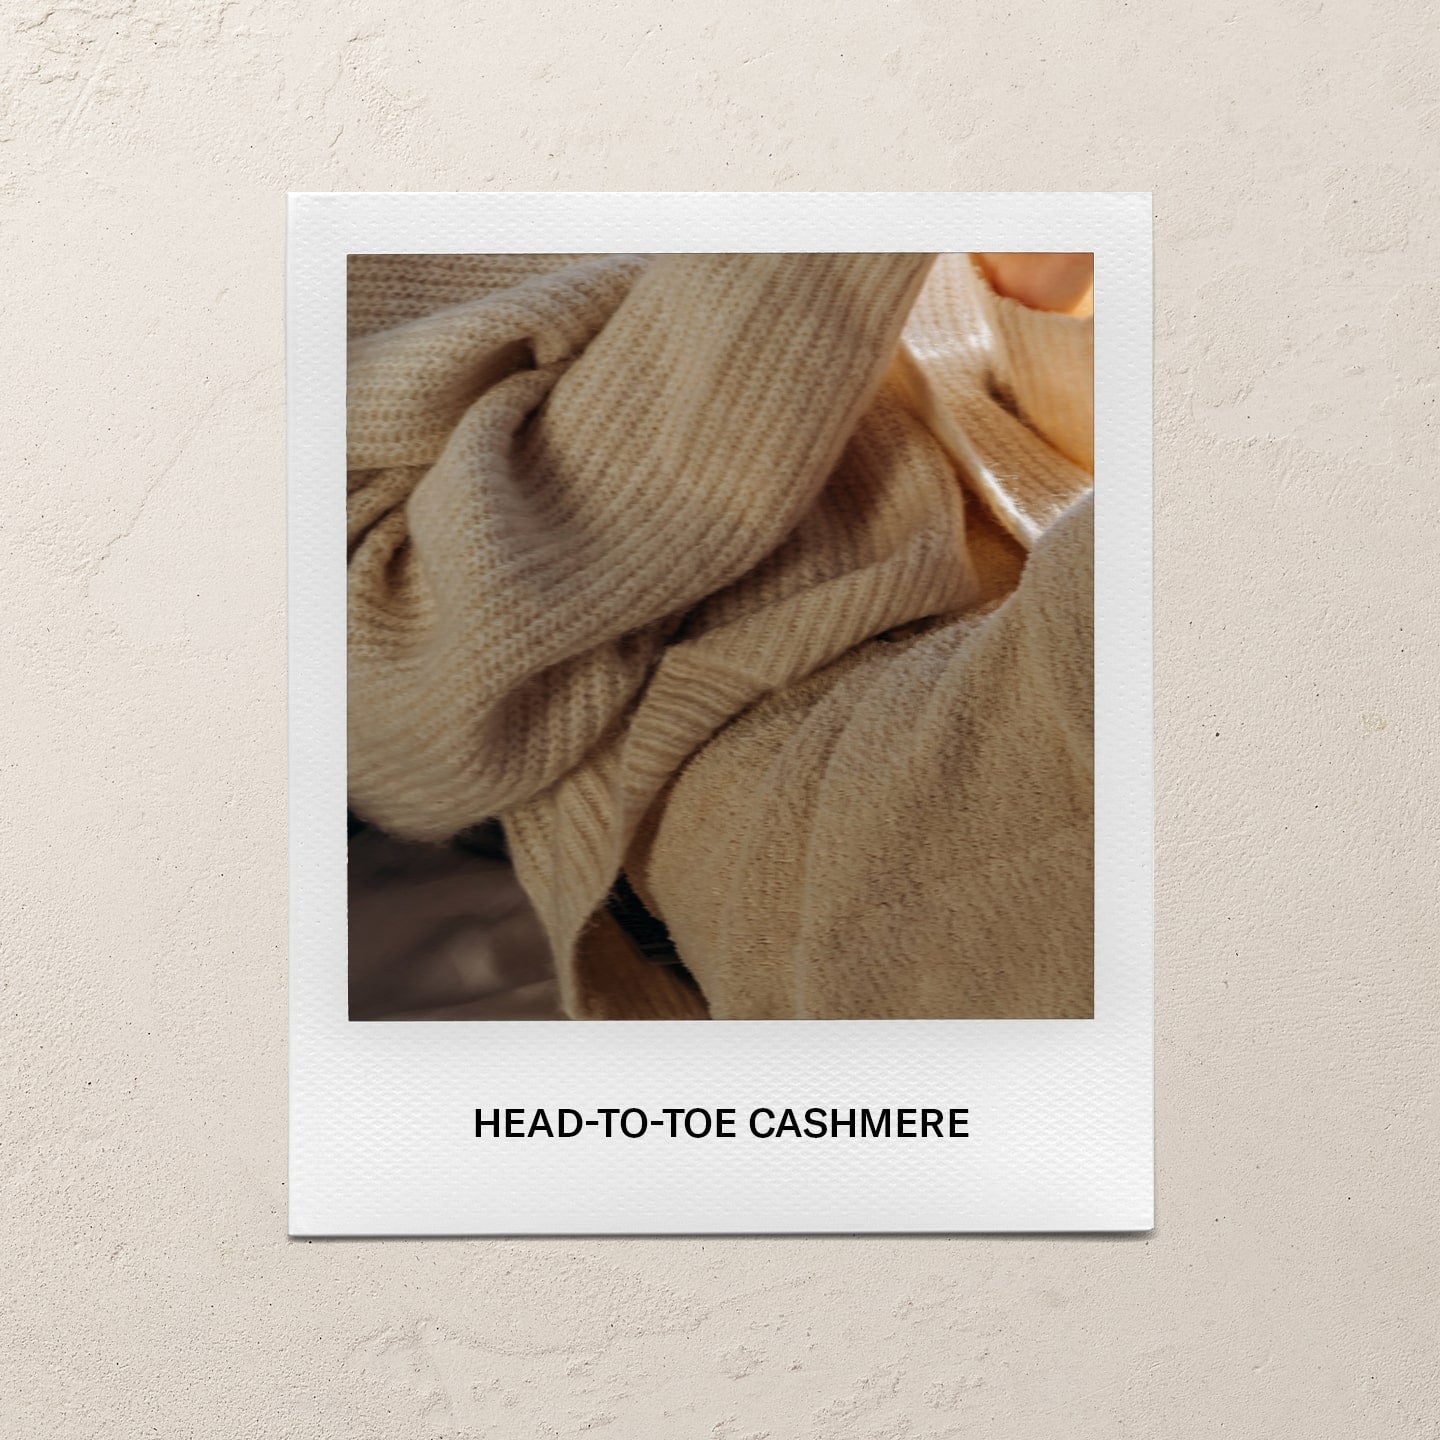 Head-to-toe cashmere